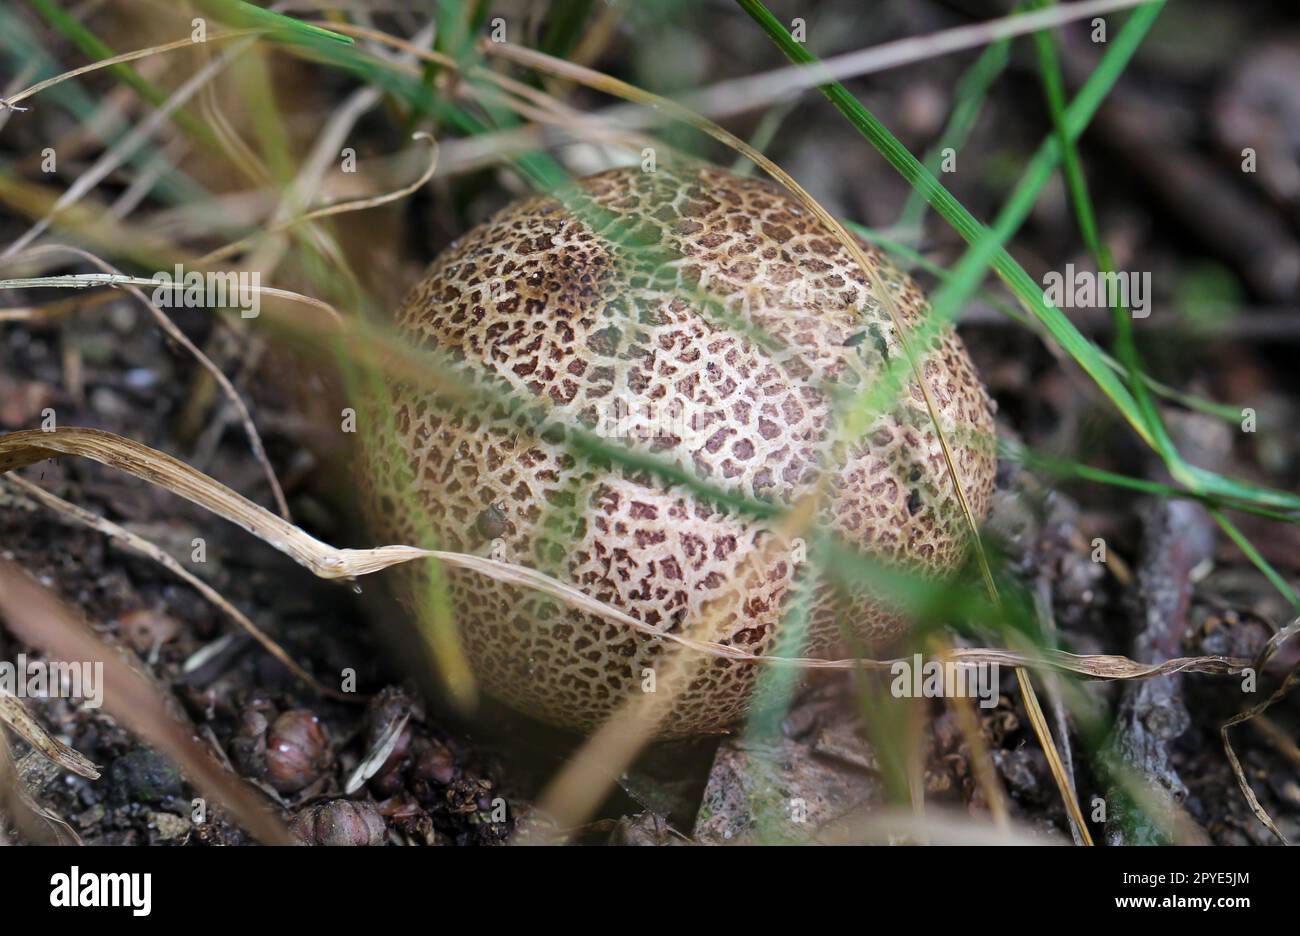 A mushroom hidden between blades of grass. A mushroom hat barely visible between the grass. Stock Photo